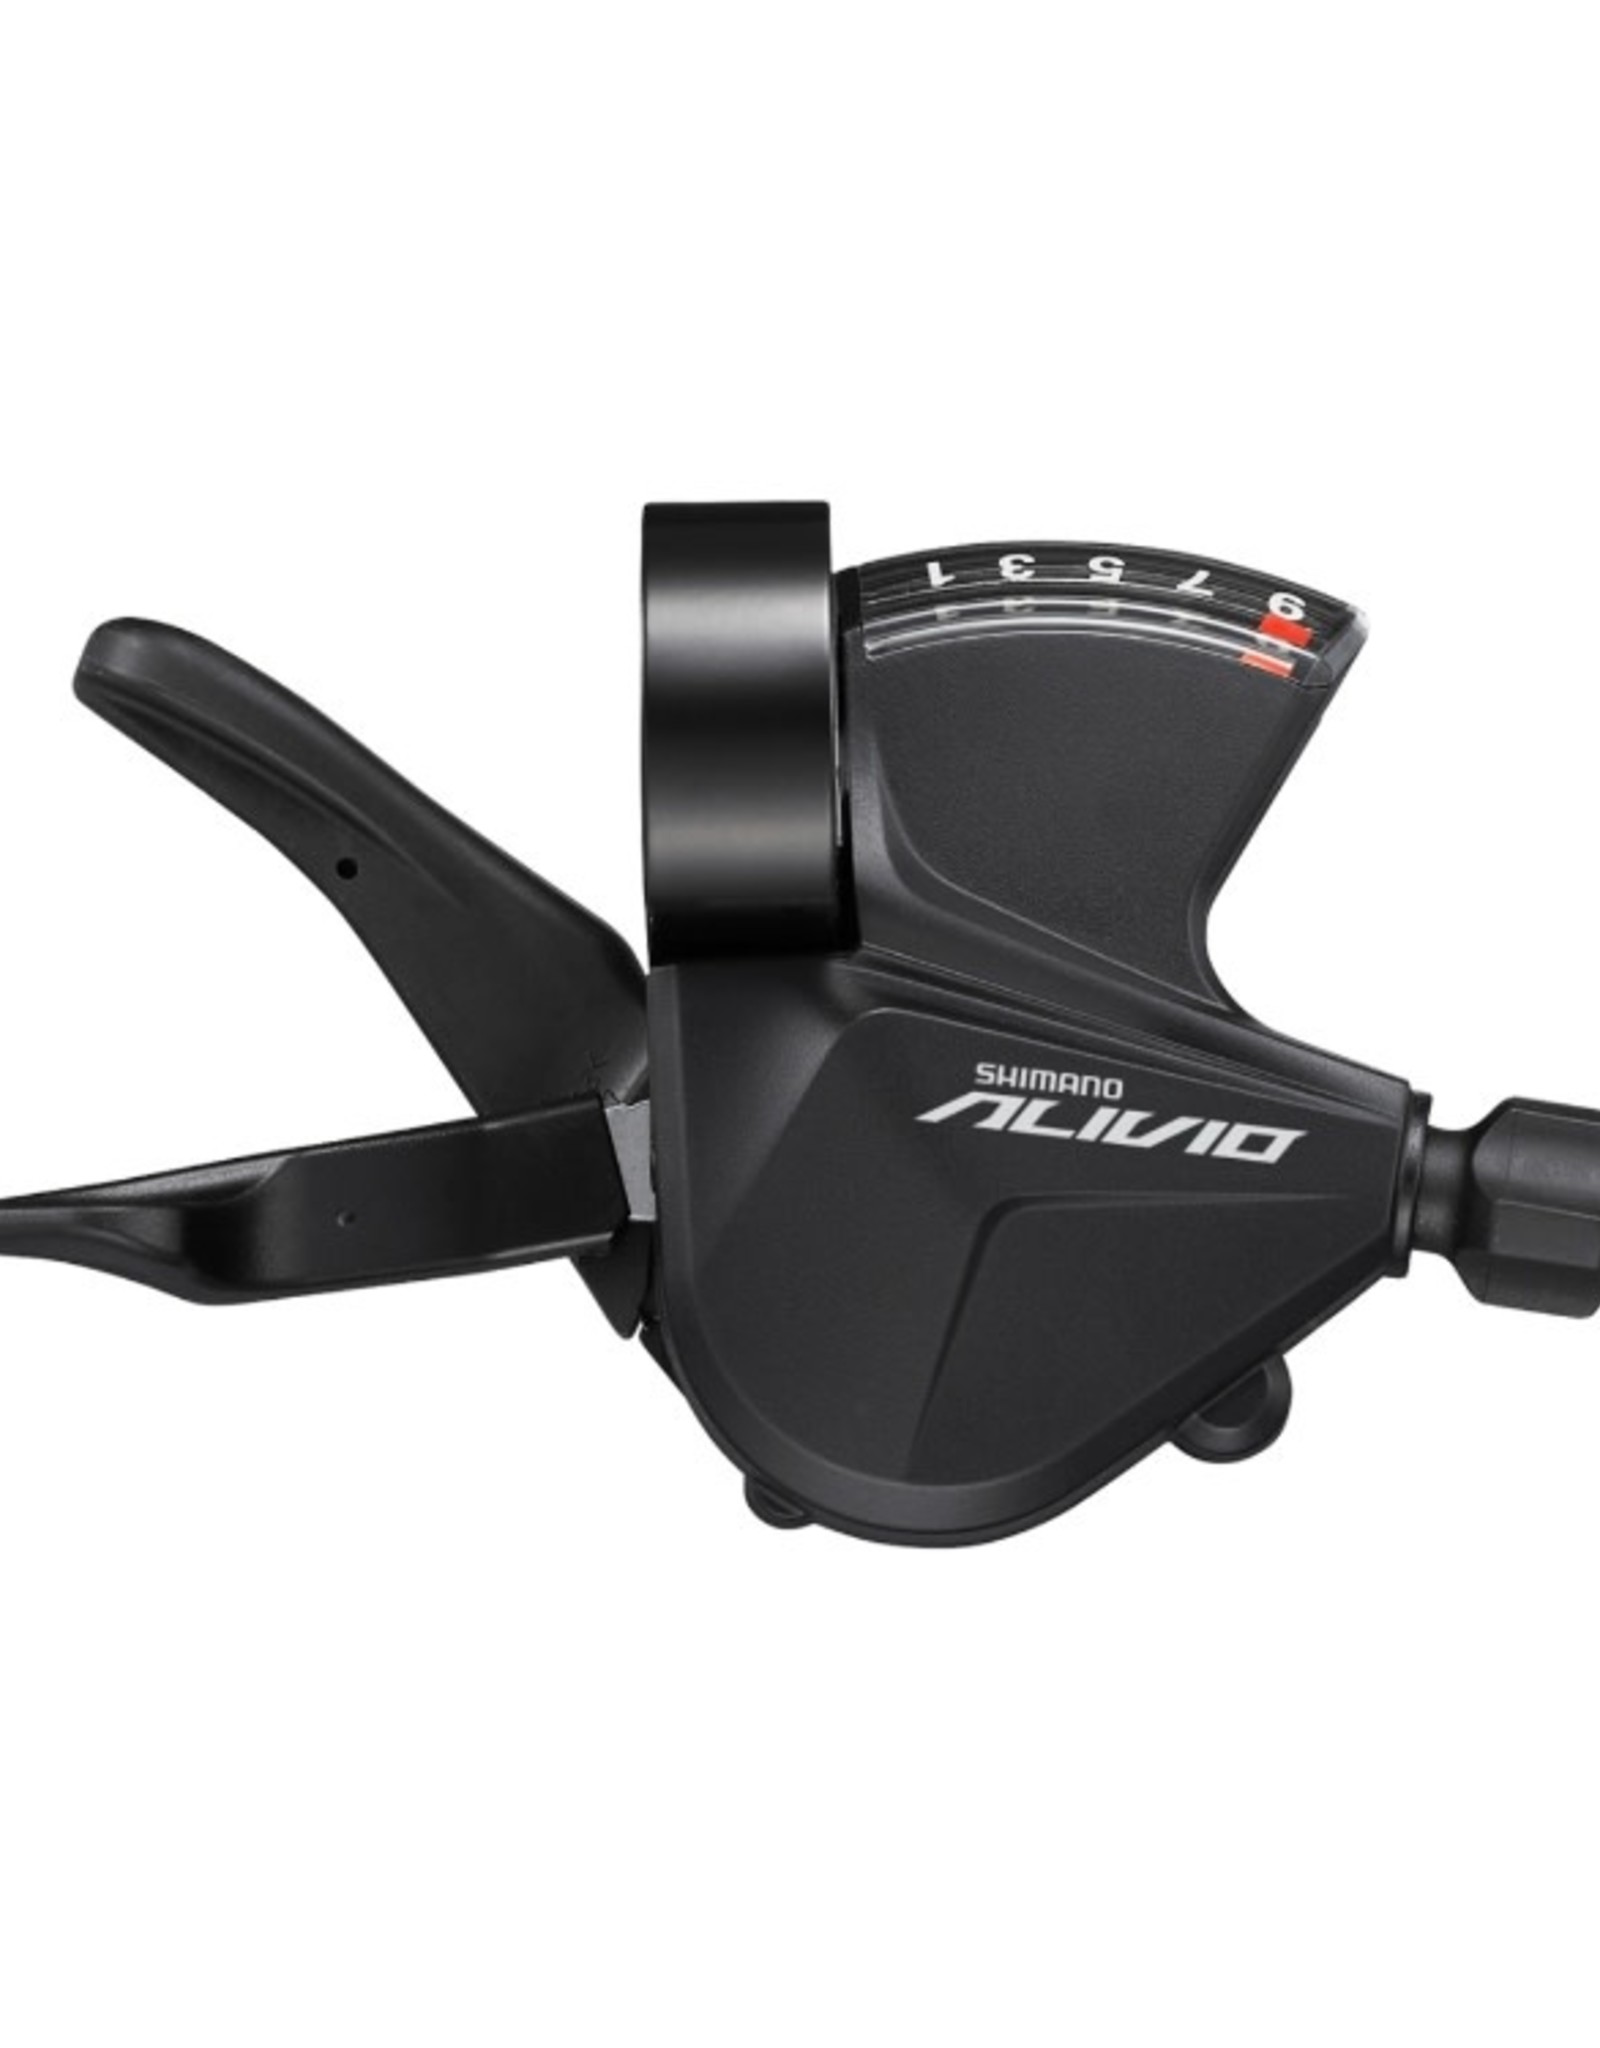 Shimano Shimano Alivio SL-M3100-R Shifter - Right, 9-Speed, RapidFire Plus, Optical Gear Display